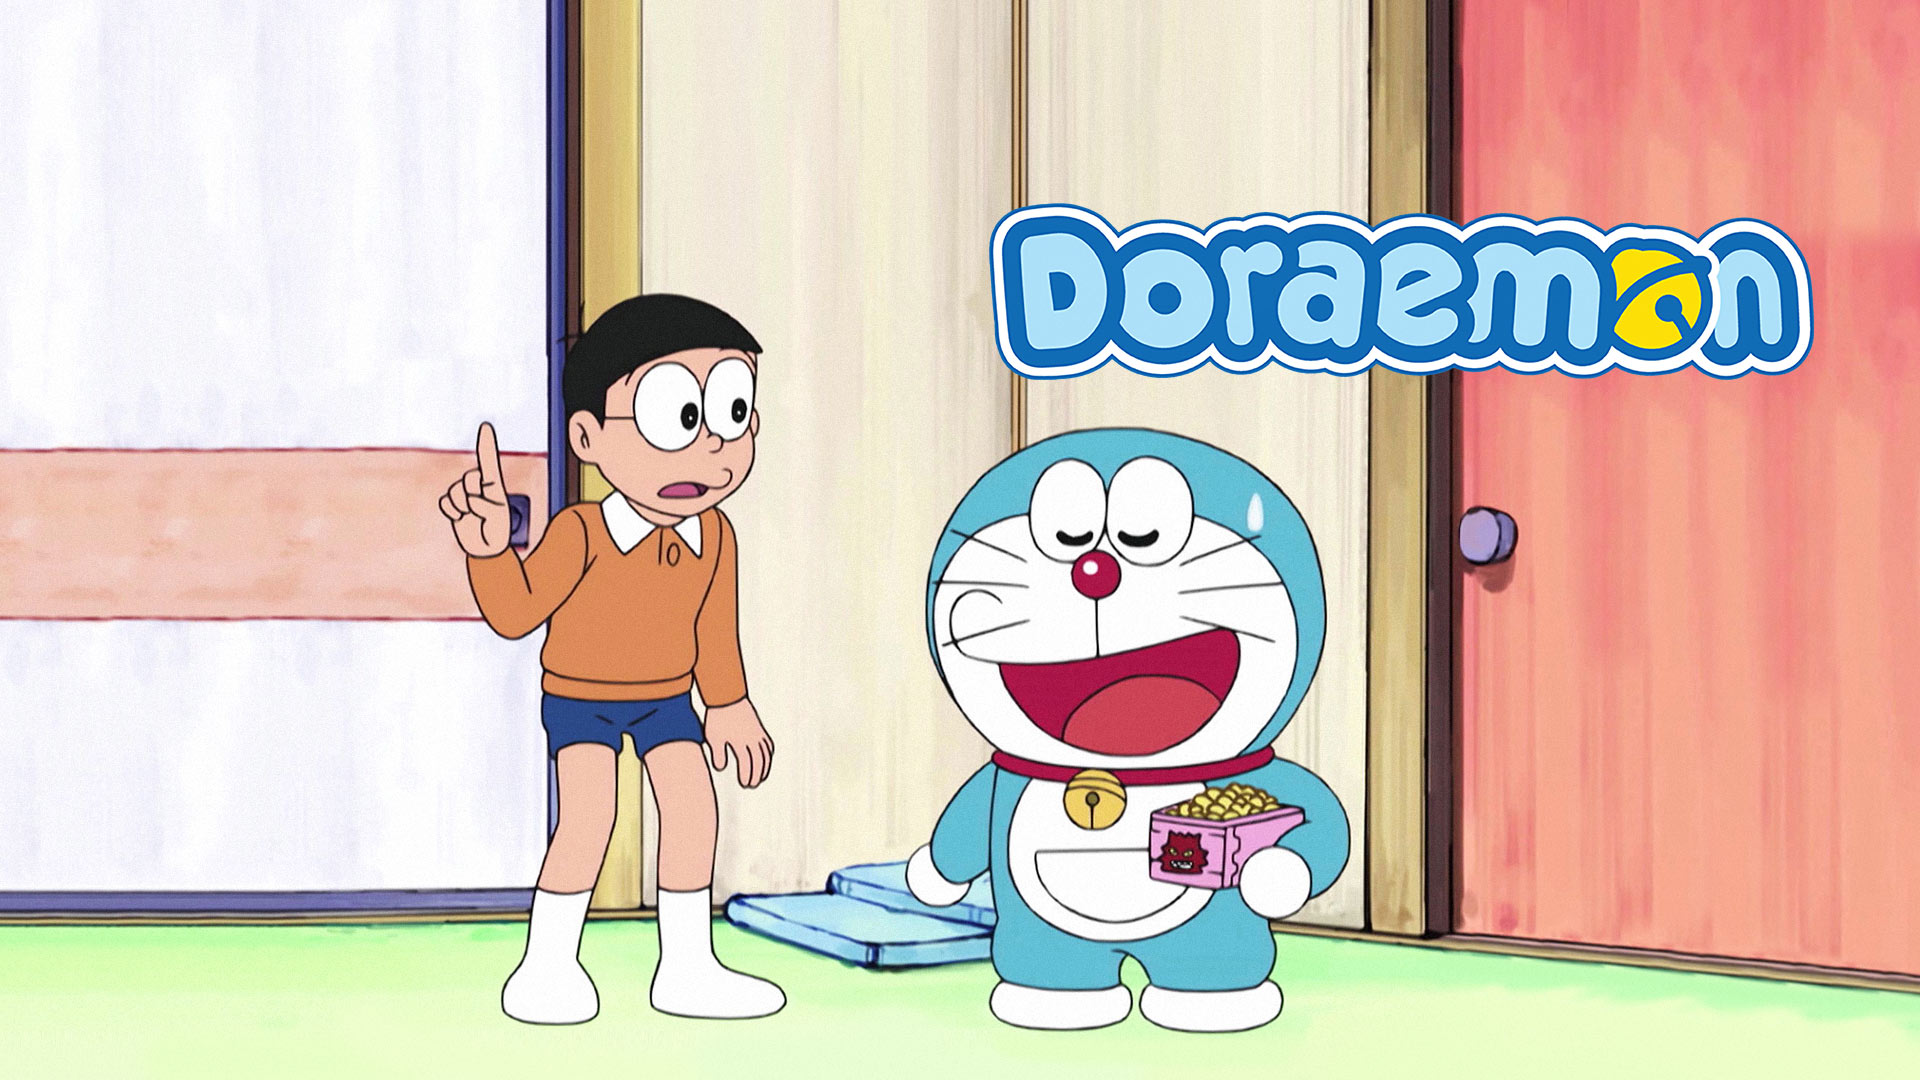 Watch All Seasons of Doraemon on Disney+ Hotstar